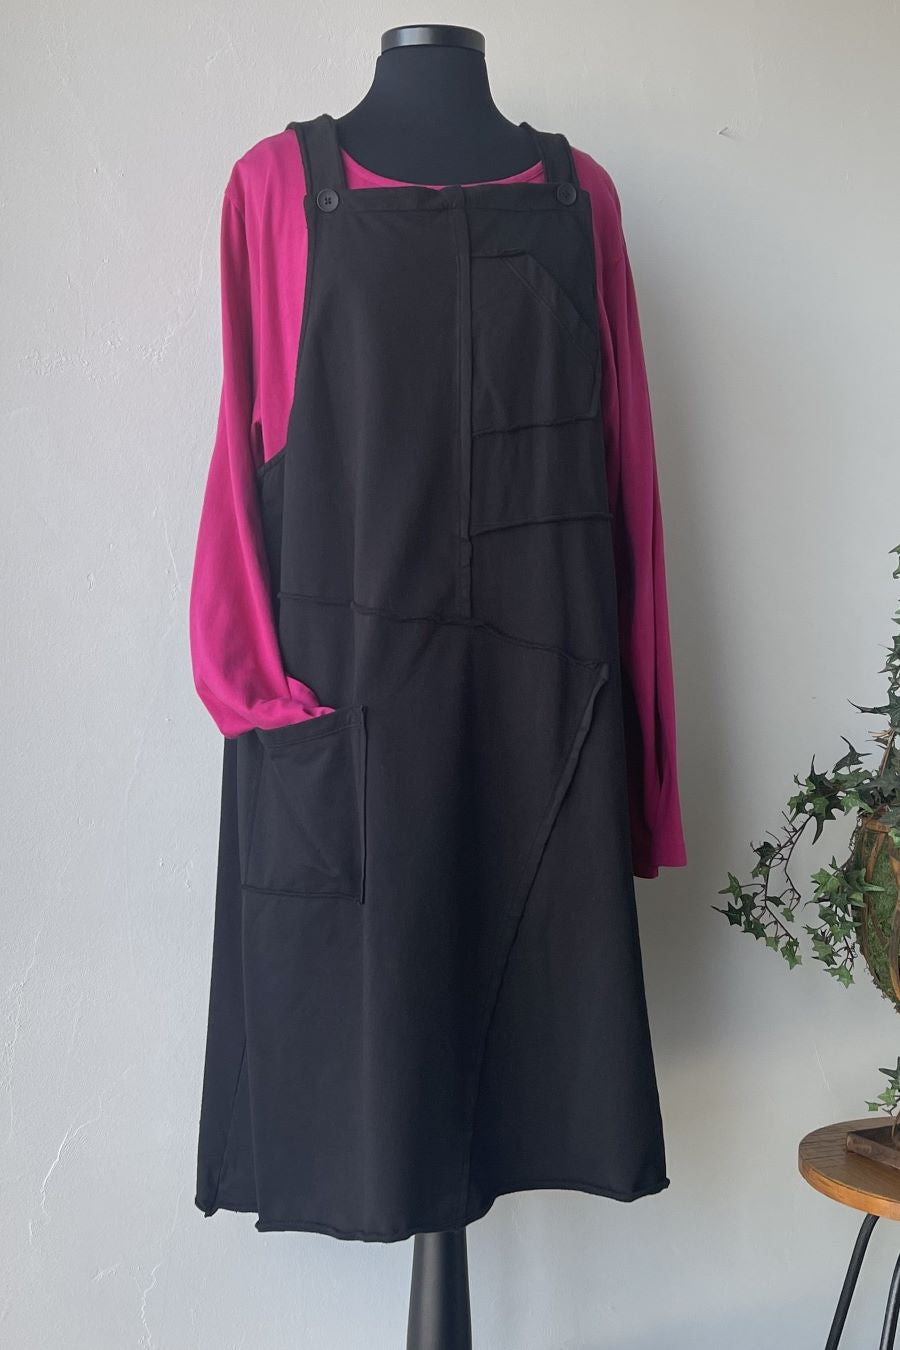 C44642SBLK Black Jumper Dress - Solid